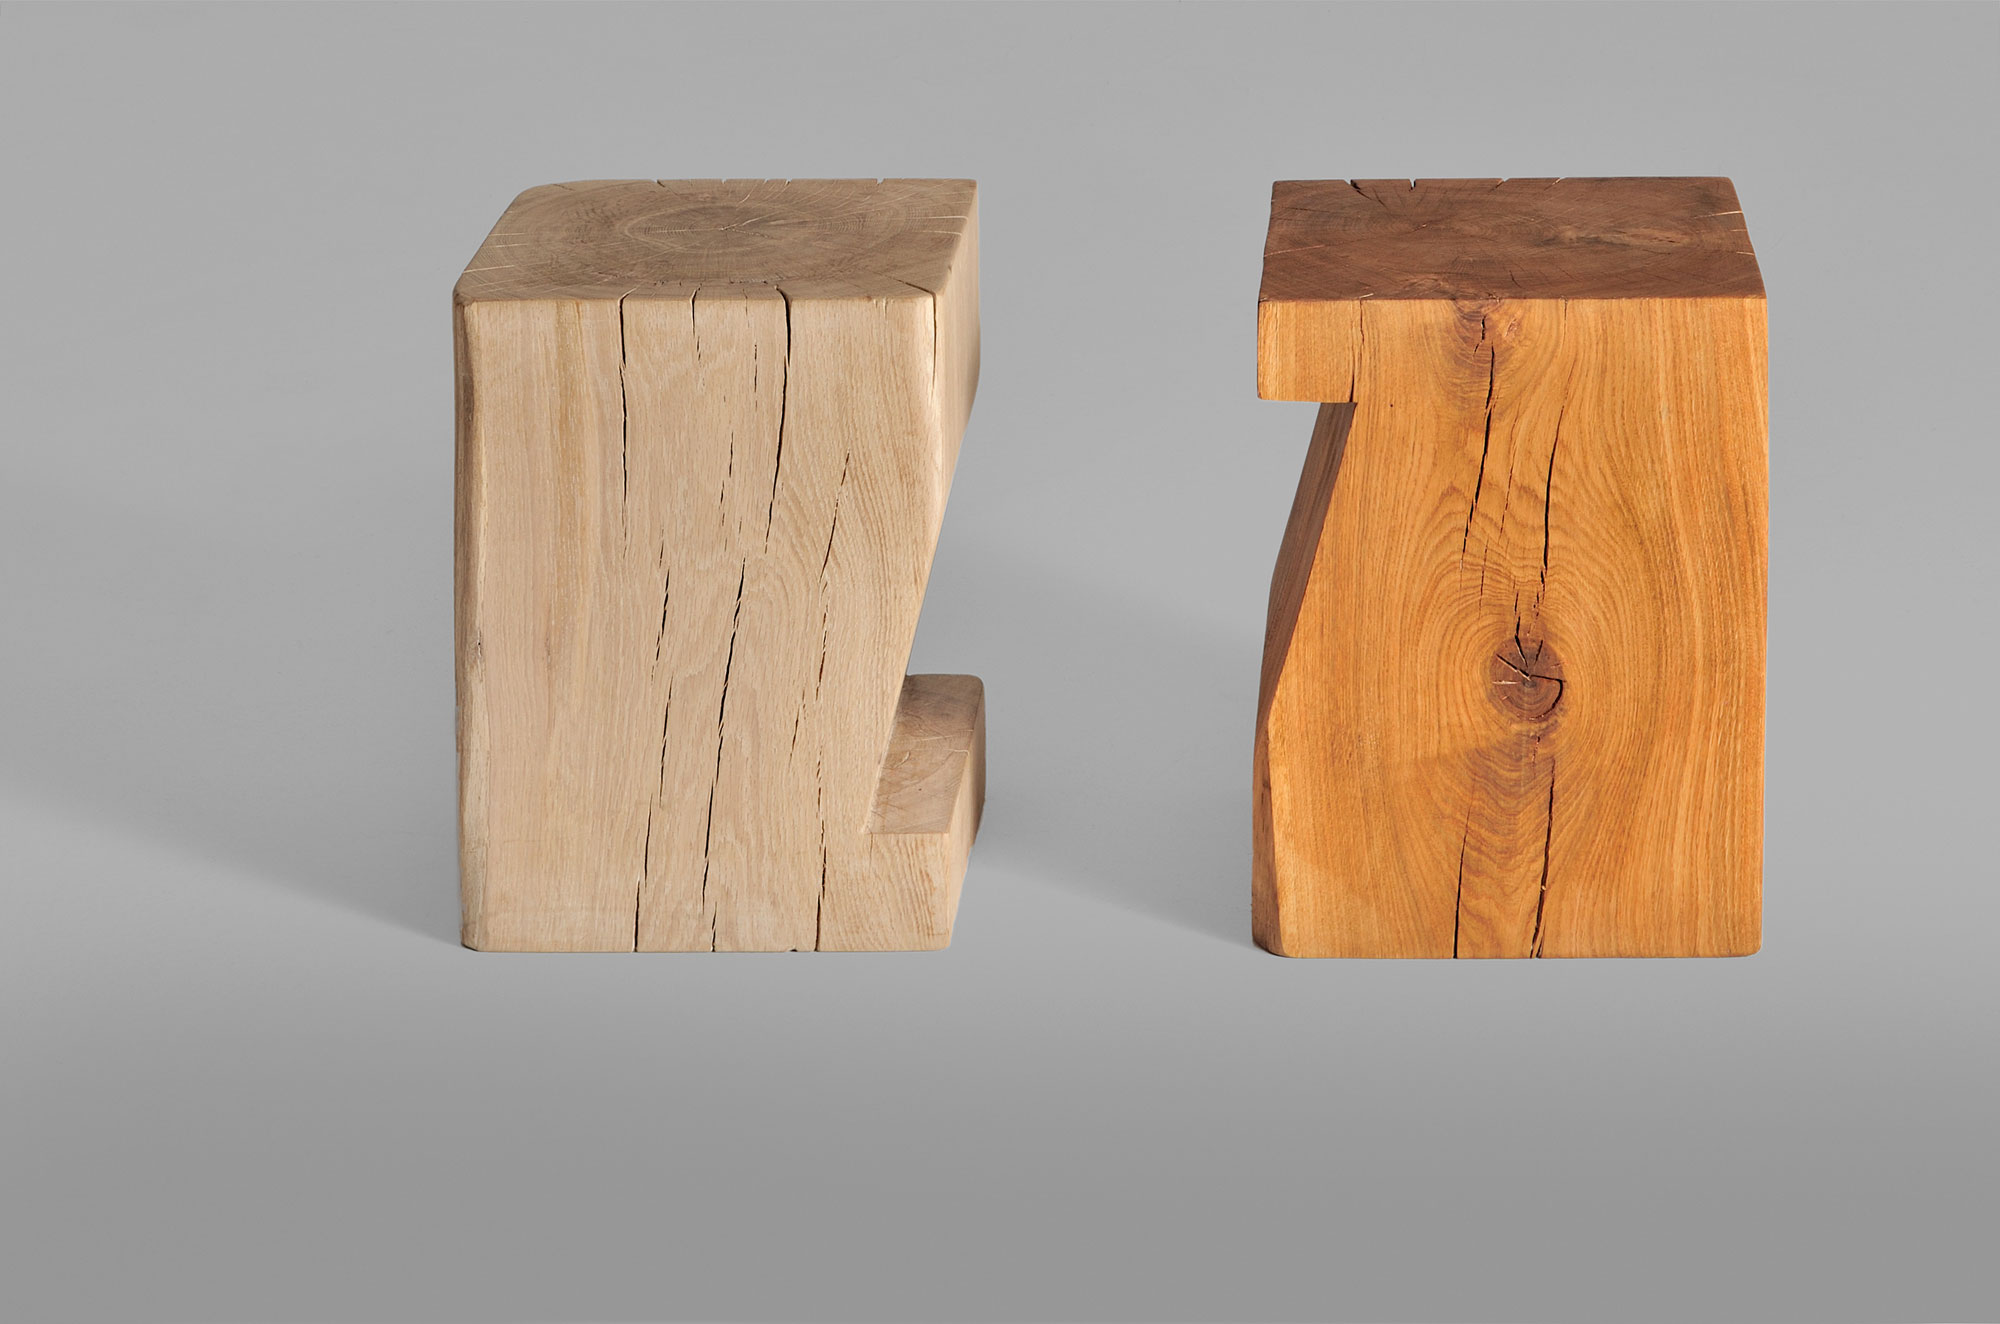 Tree Stump Coffee Table PFEIFE 3665 custom made in solid wood by vitamin design